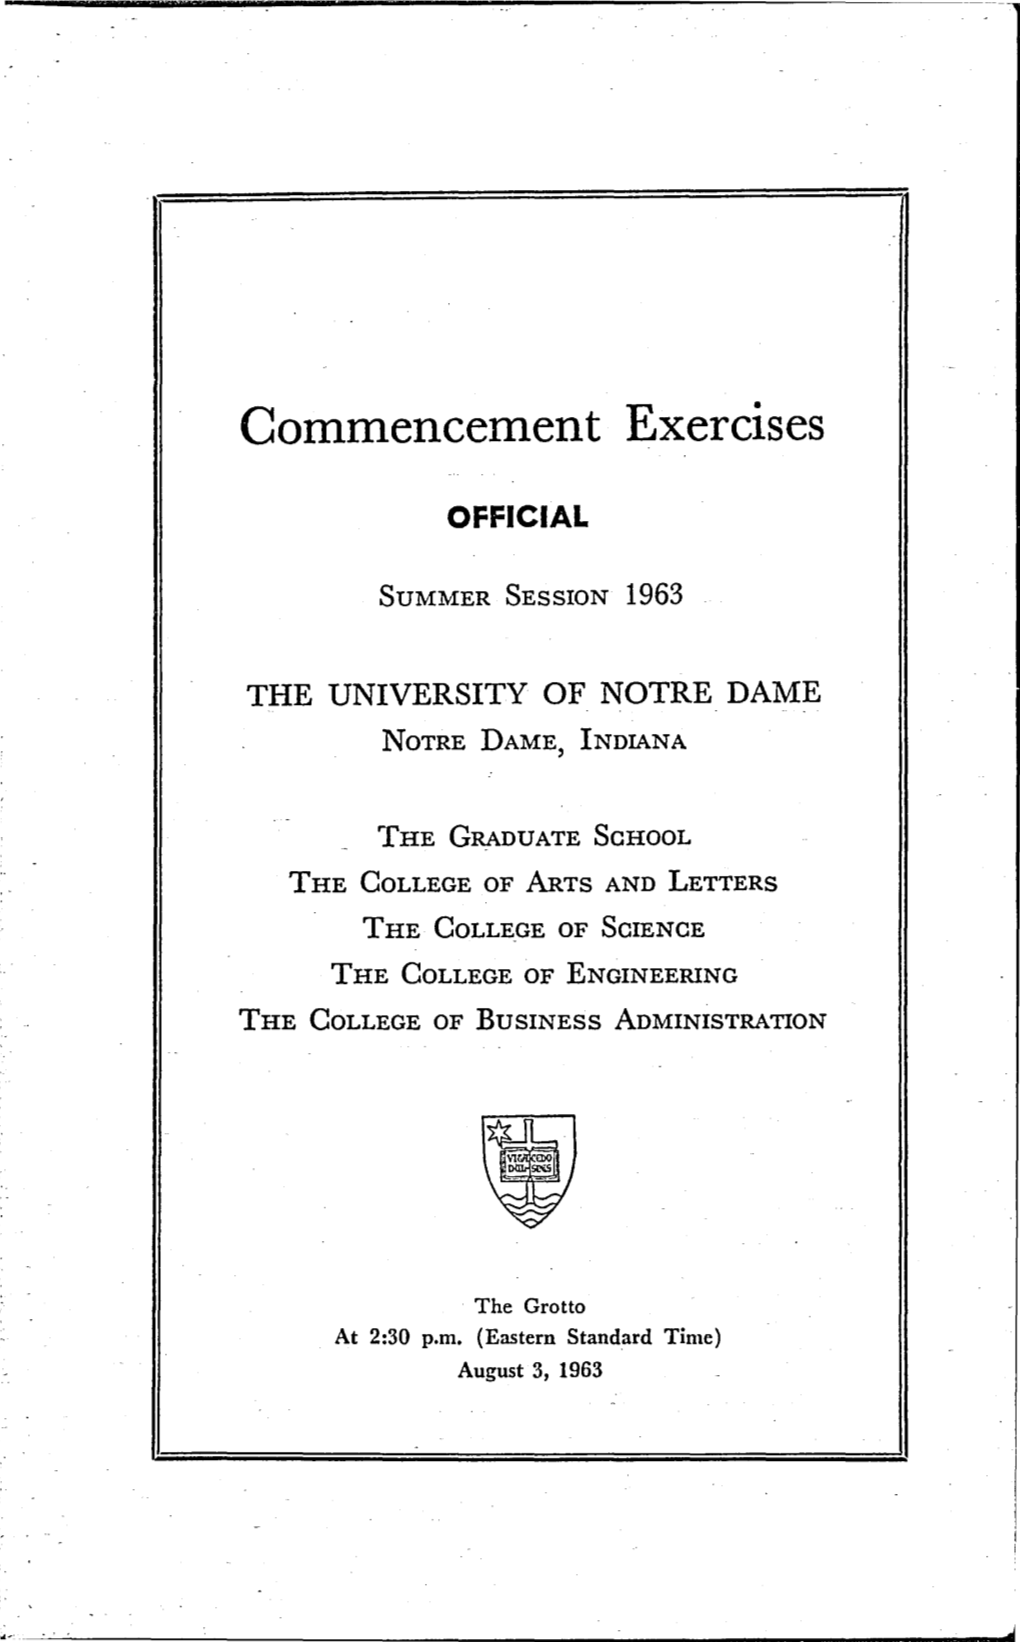 1963-08-03 University of Notre Dame Commencement Program